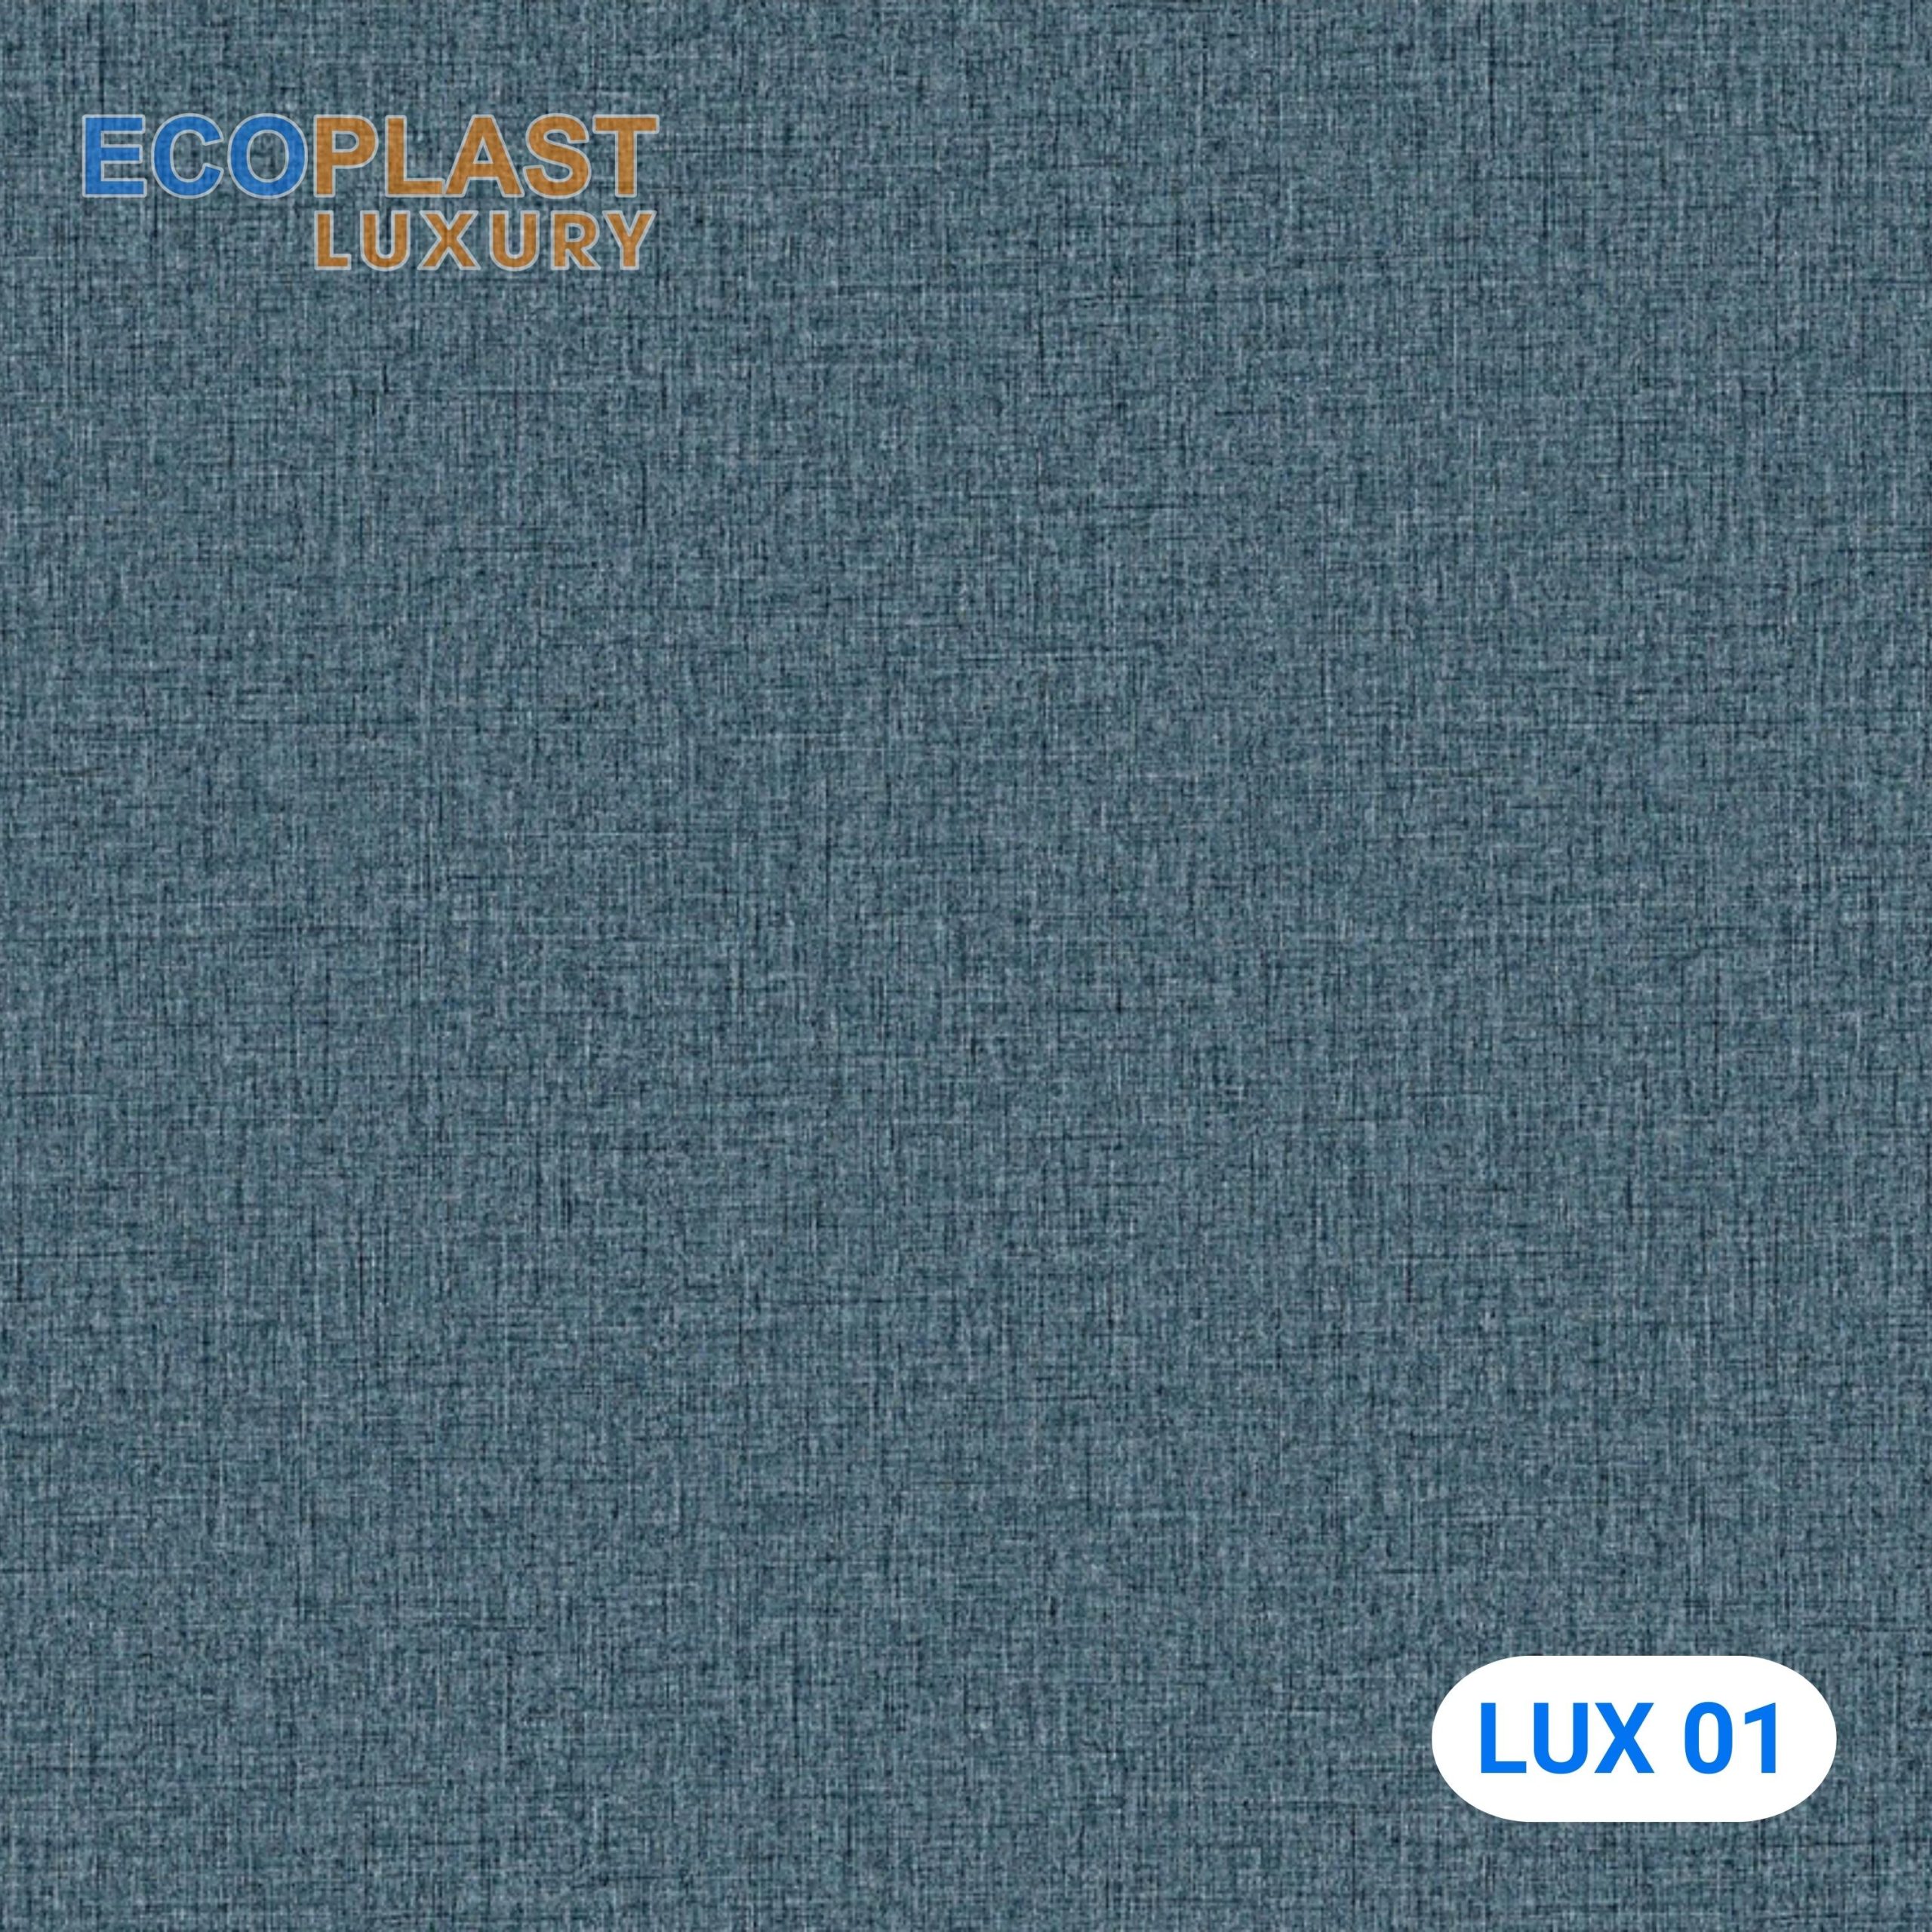 Mã màu tấm nhựa nội thất Ecoplast Lux 01